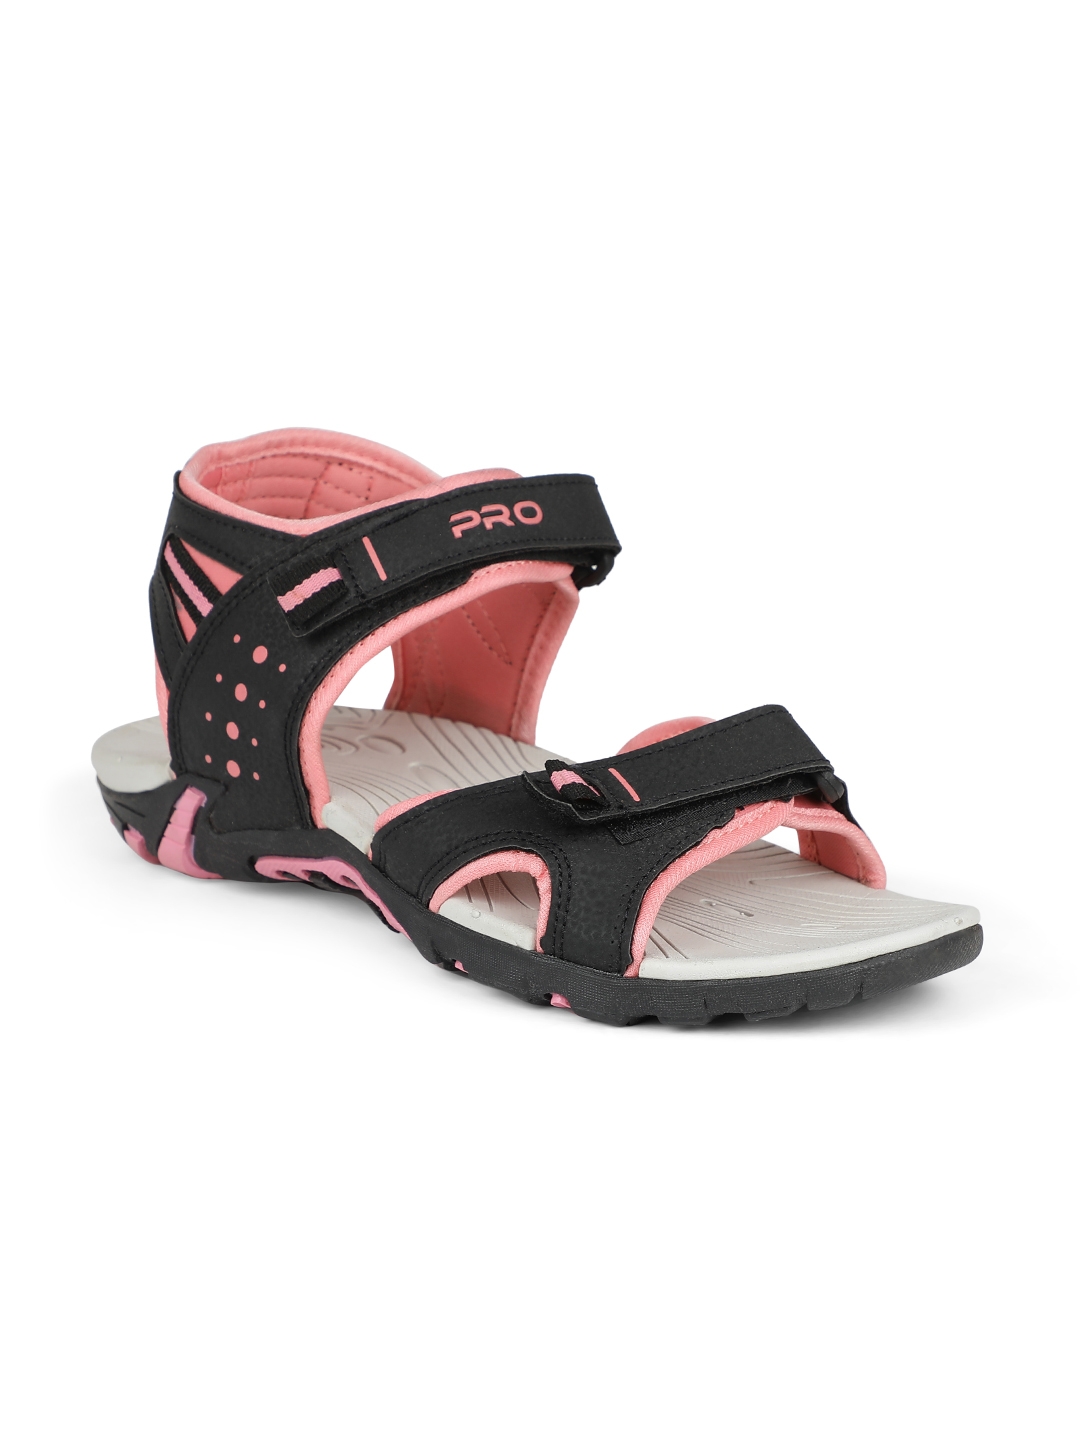 Clarks Womens Amanda Sprint Blue Suede Active Sport Flat Sandals Shoes |  eBay